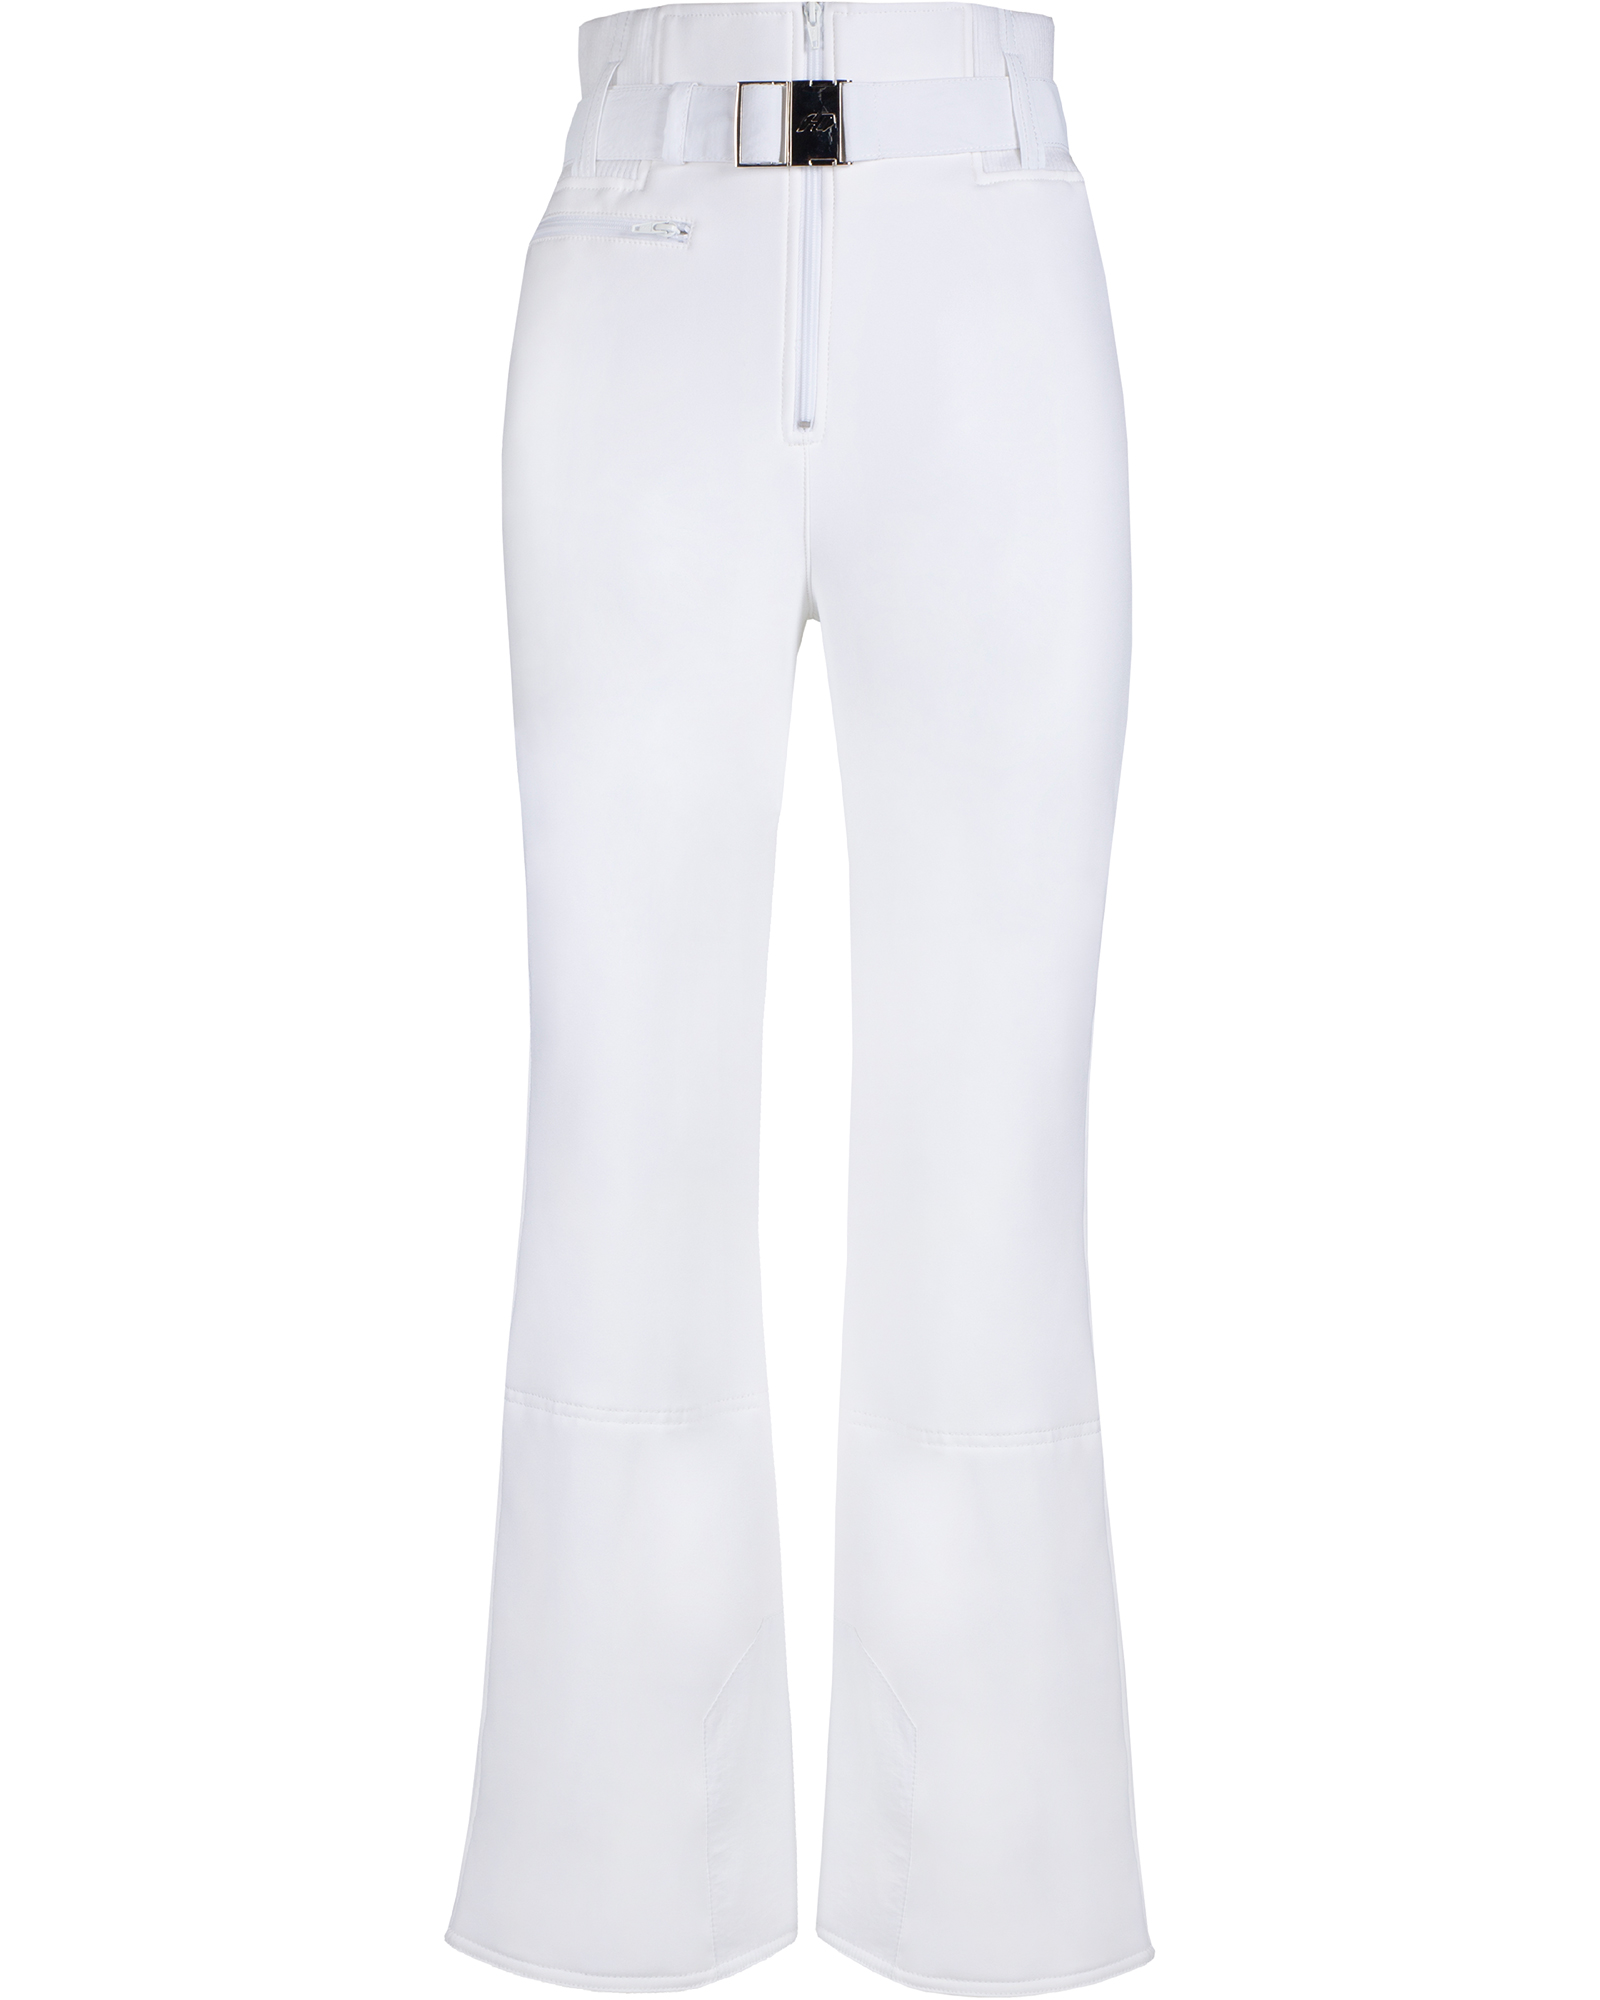 Duvillard Gridin Women’s Pants - White 10